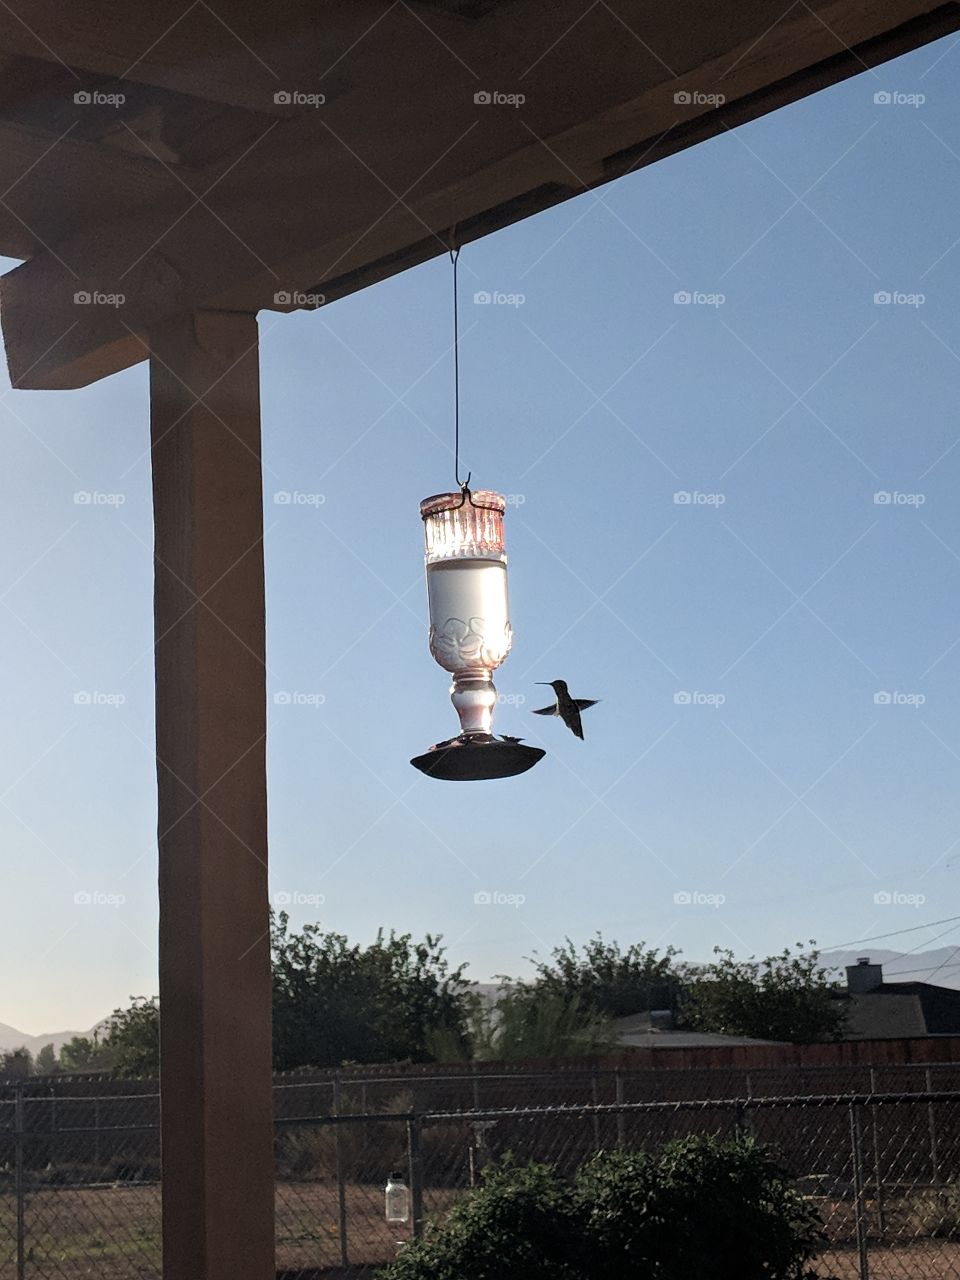 Precious High Desert hummingbird getting some lunch